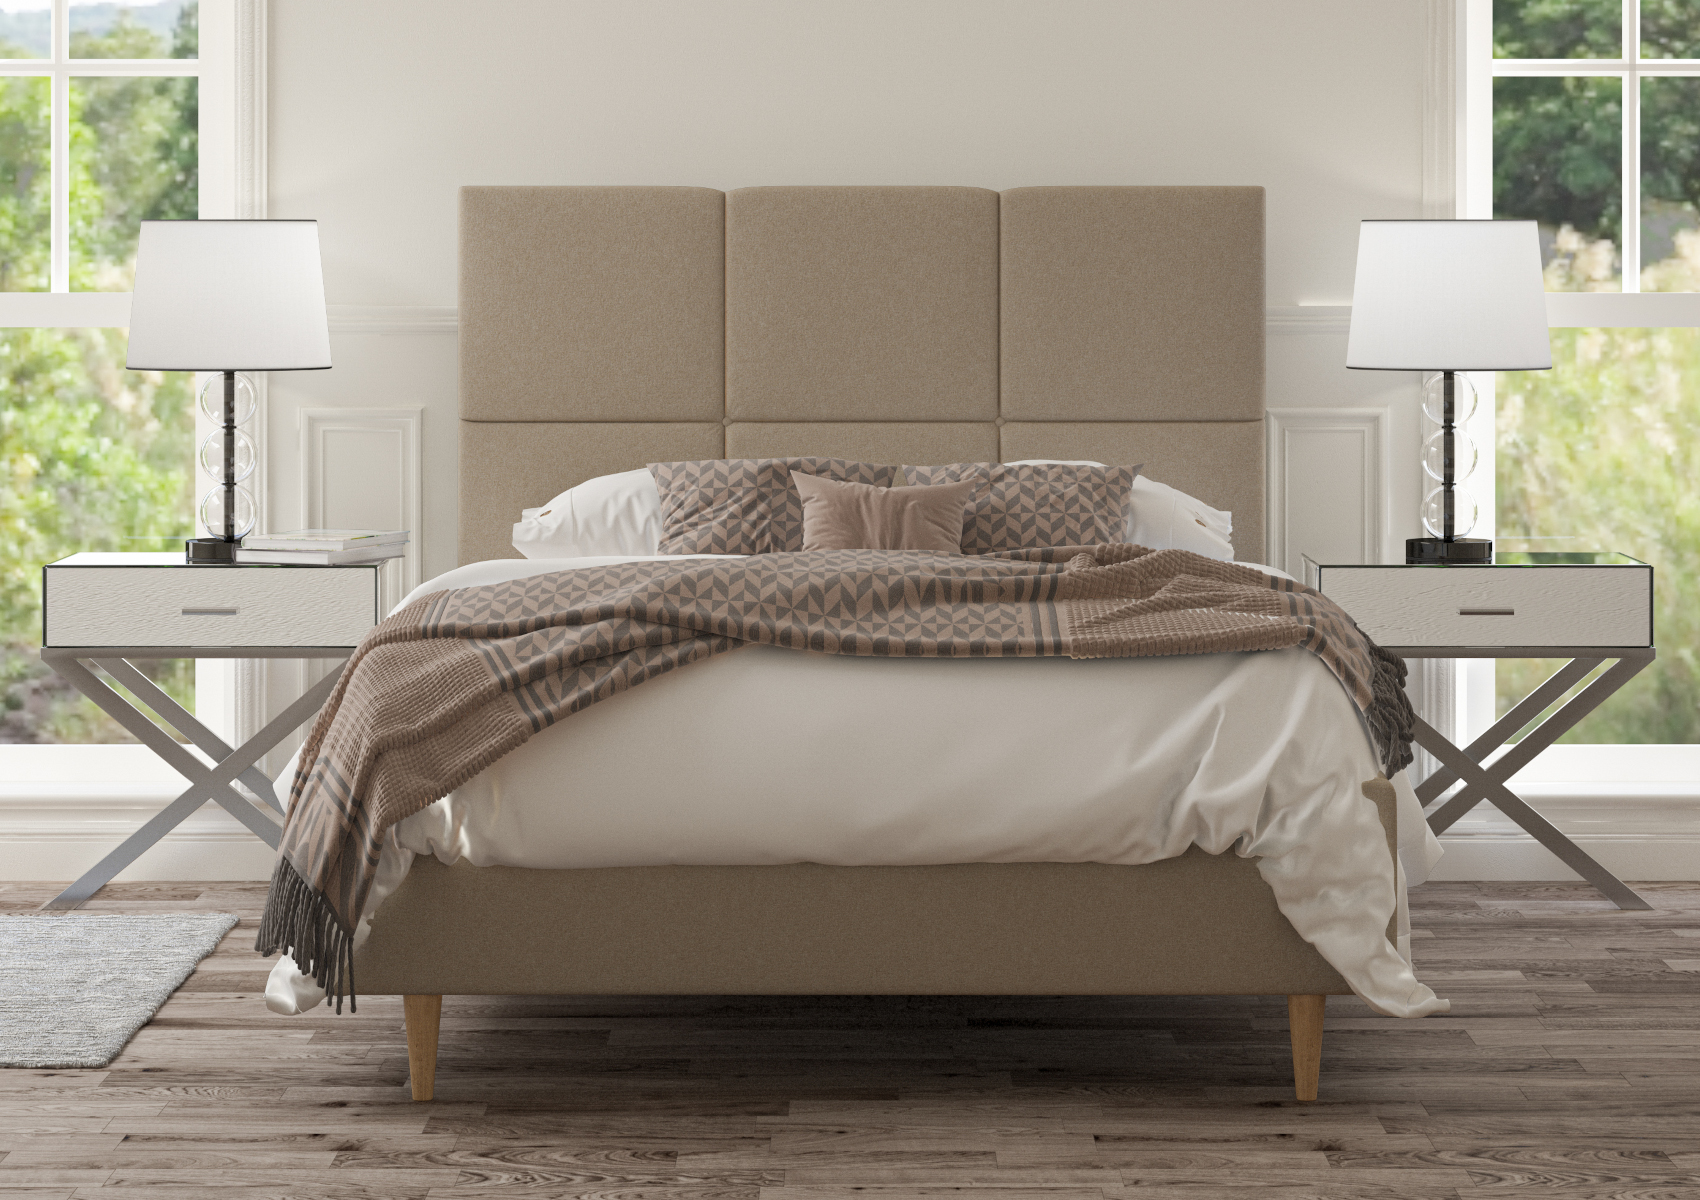 View Lauren Arran Natural Upholstered King Size Bed Time4Sleep information